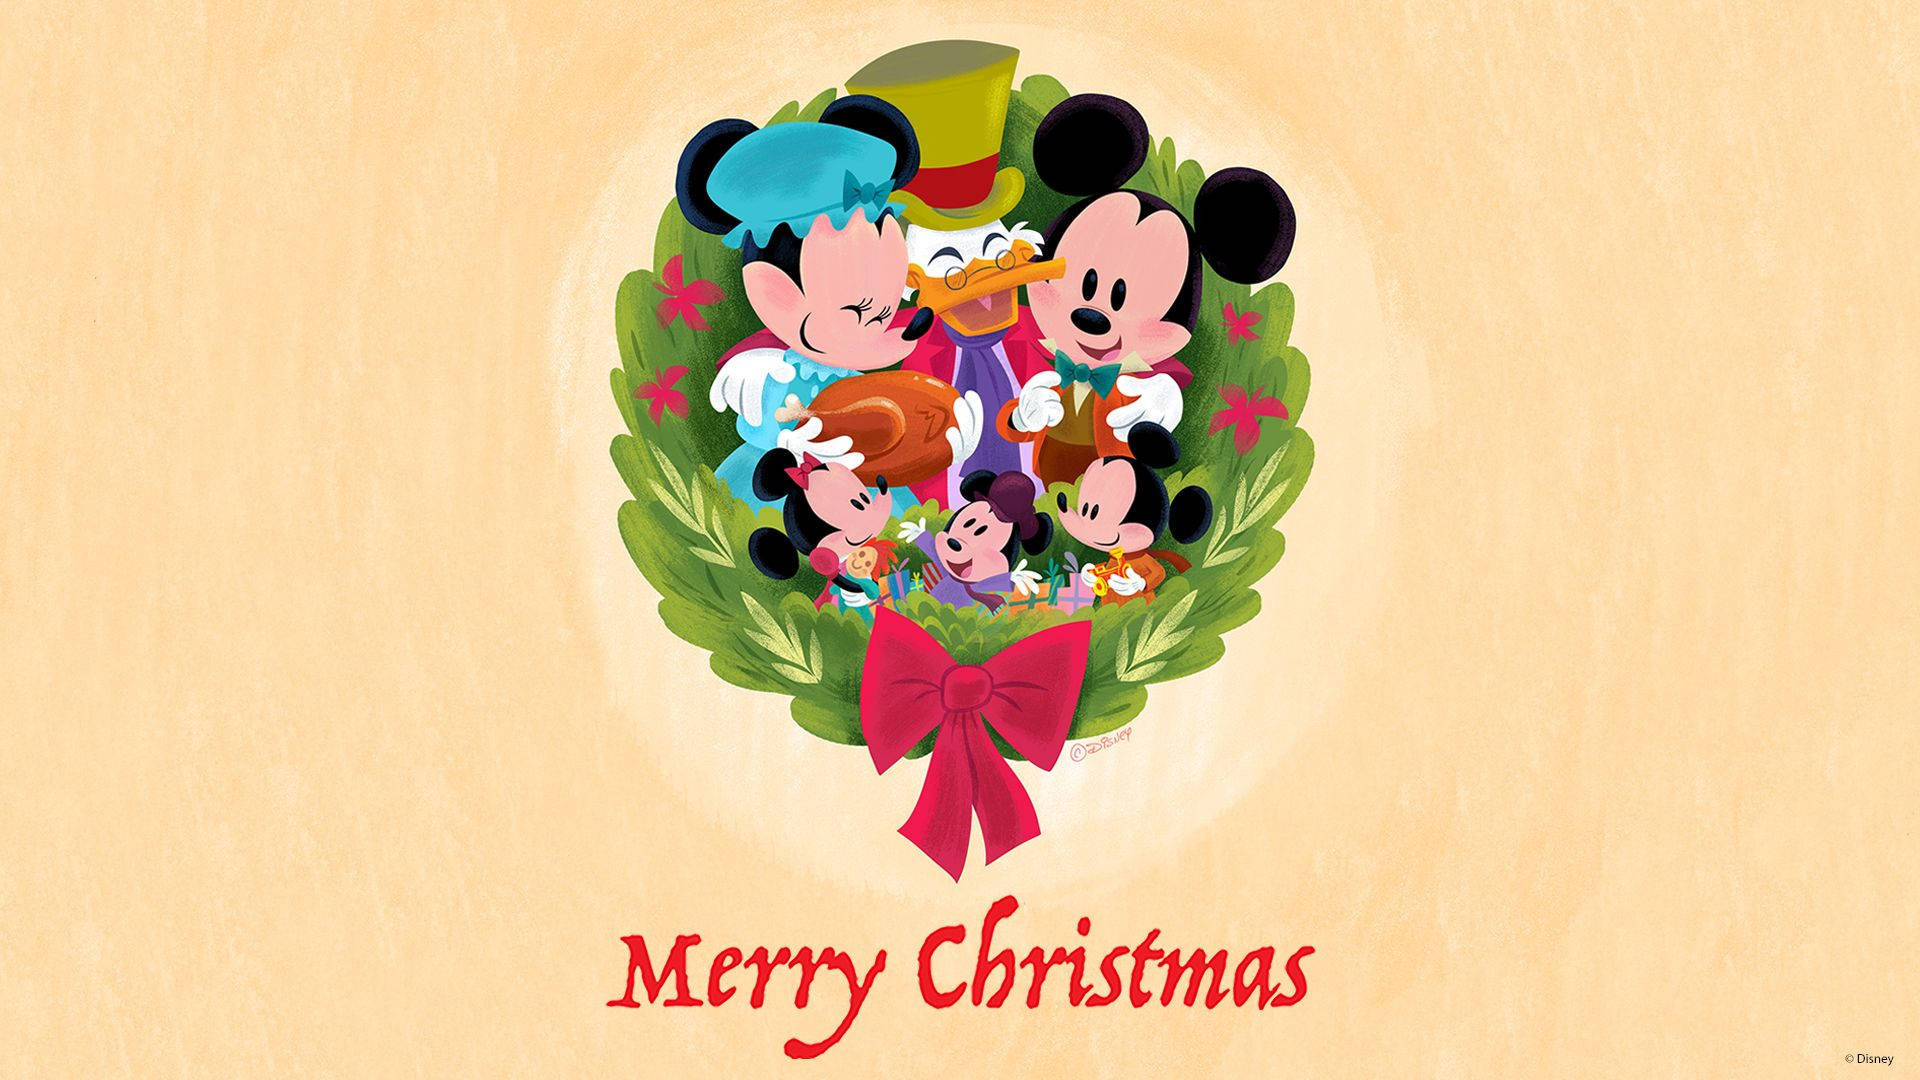 Disney 1920x1080 Hd Mickey Mouse Merry Christmas Wreath Wallpaper